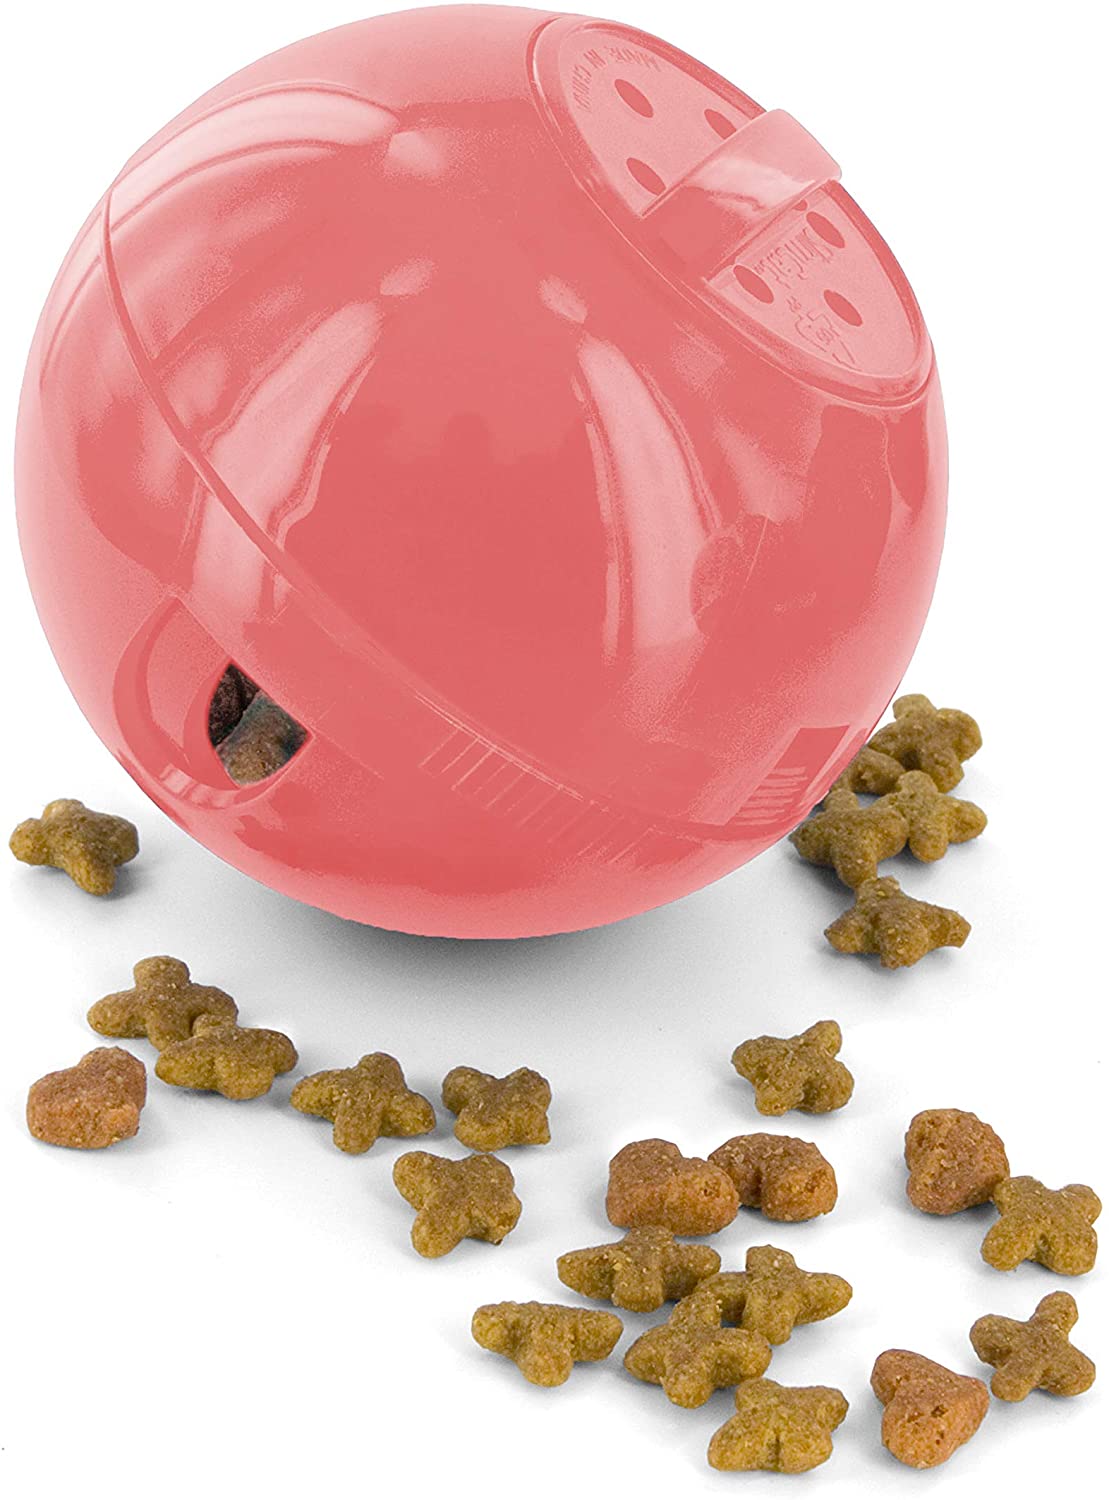 PetSafe - Brinquedo dispensador de comida SlimCat